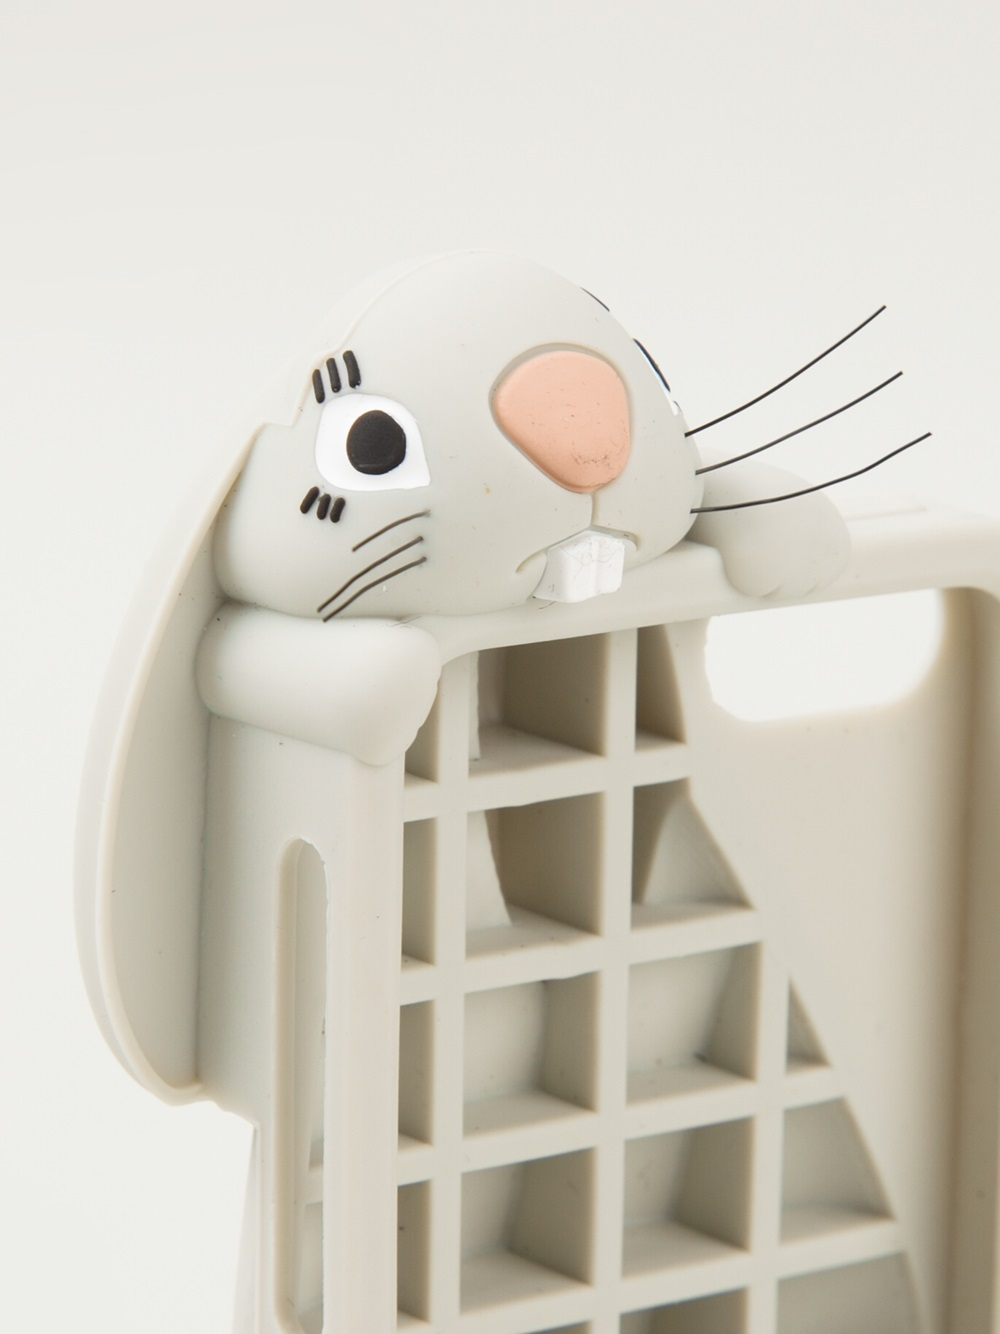 moschino rabbit iphone case